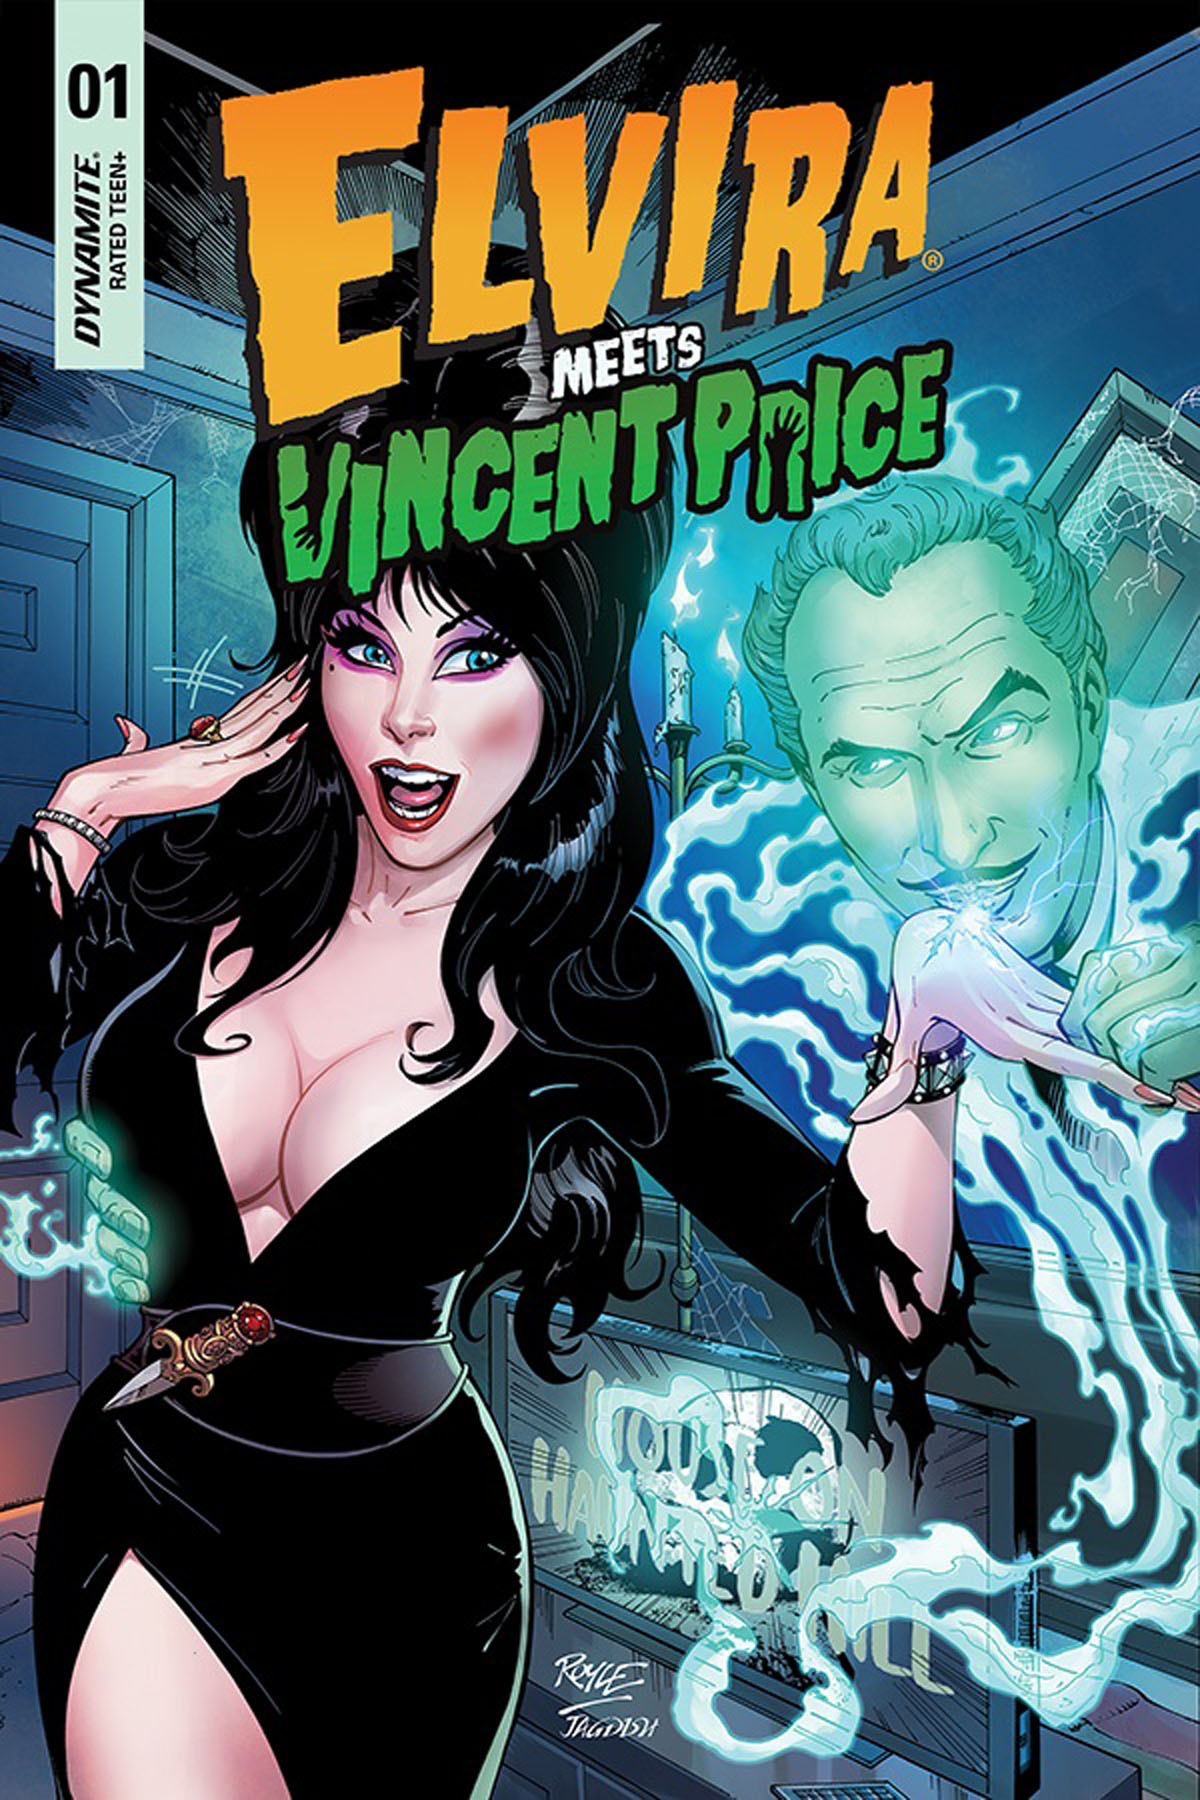 Elvira Meets Vincent Price #1 cover by John Royle